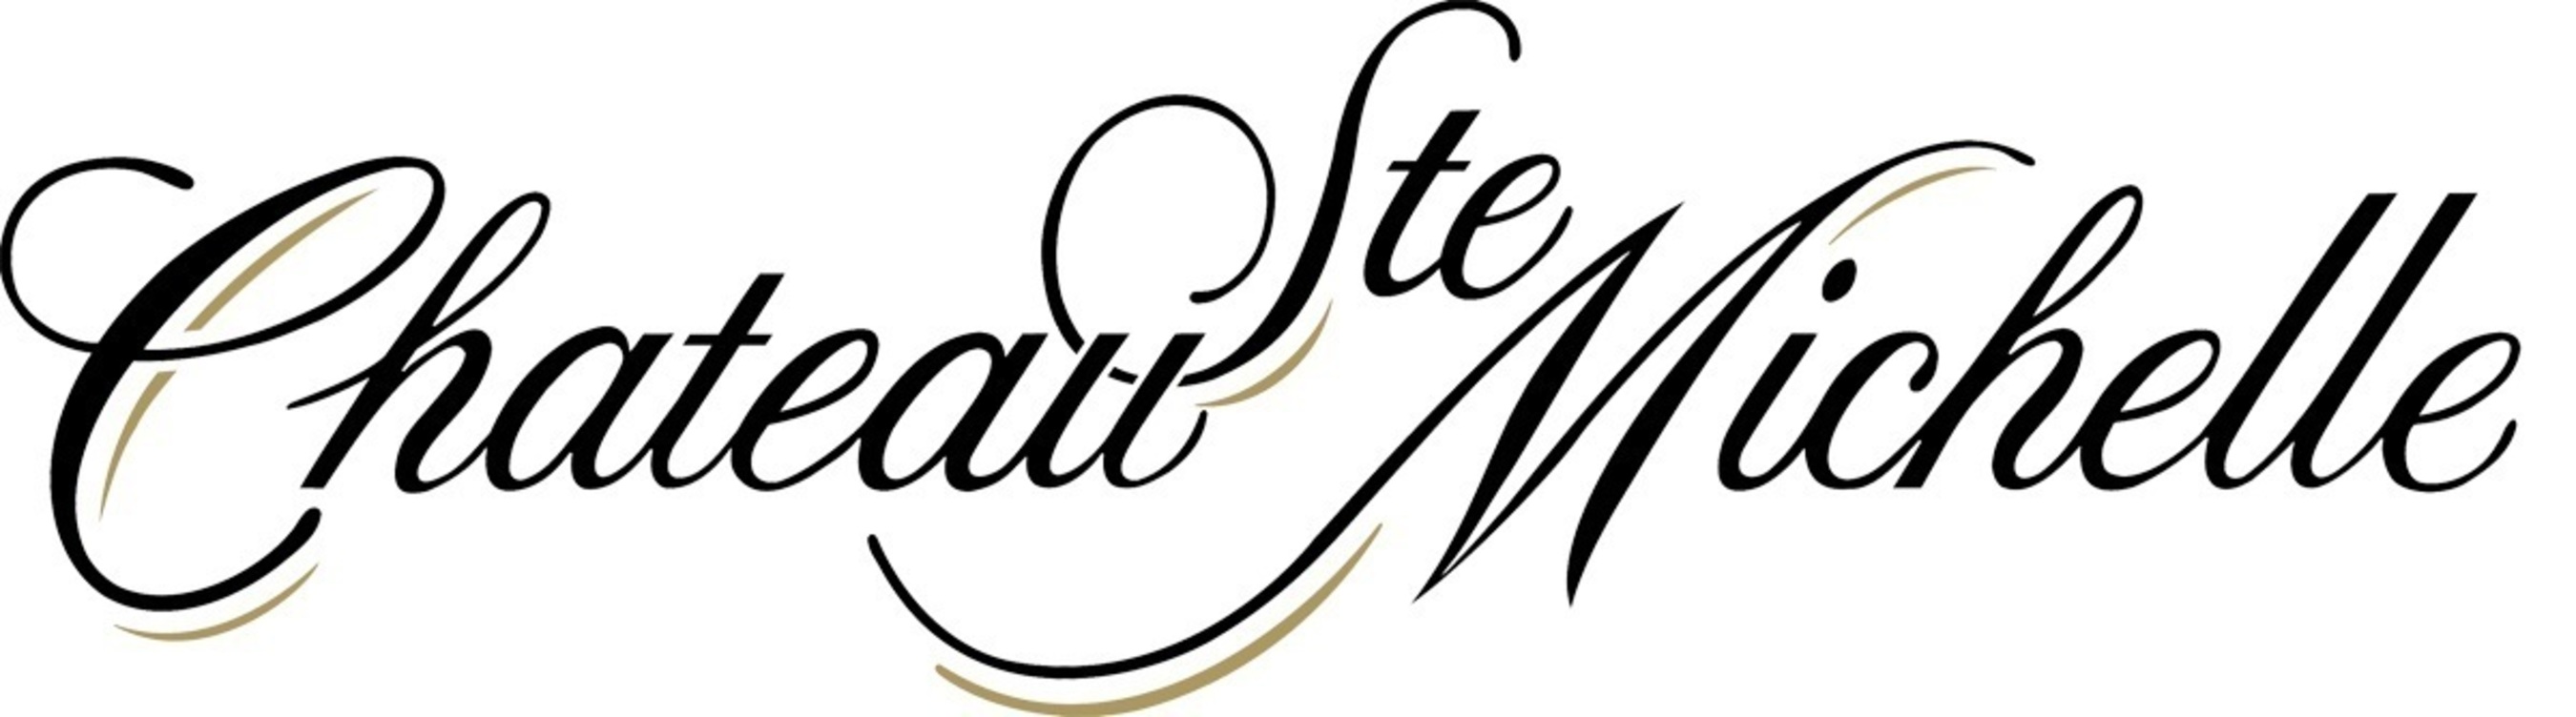 Chateau Ste. Michelle Logo (PRNewsFoto/Chateau Ste. Michelle Winery )